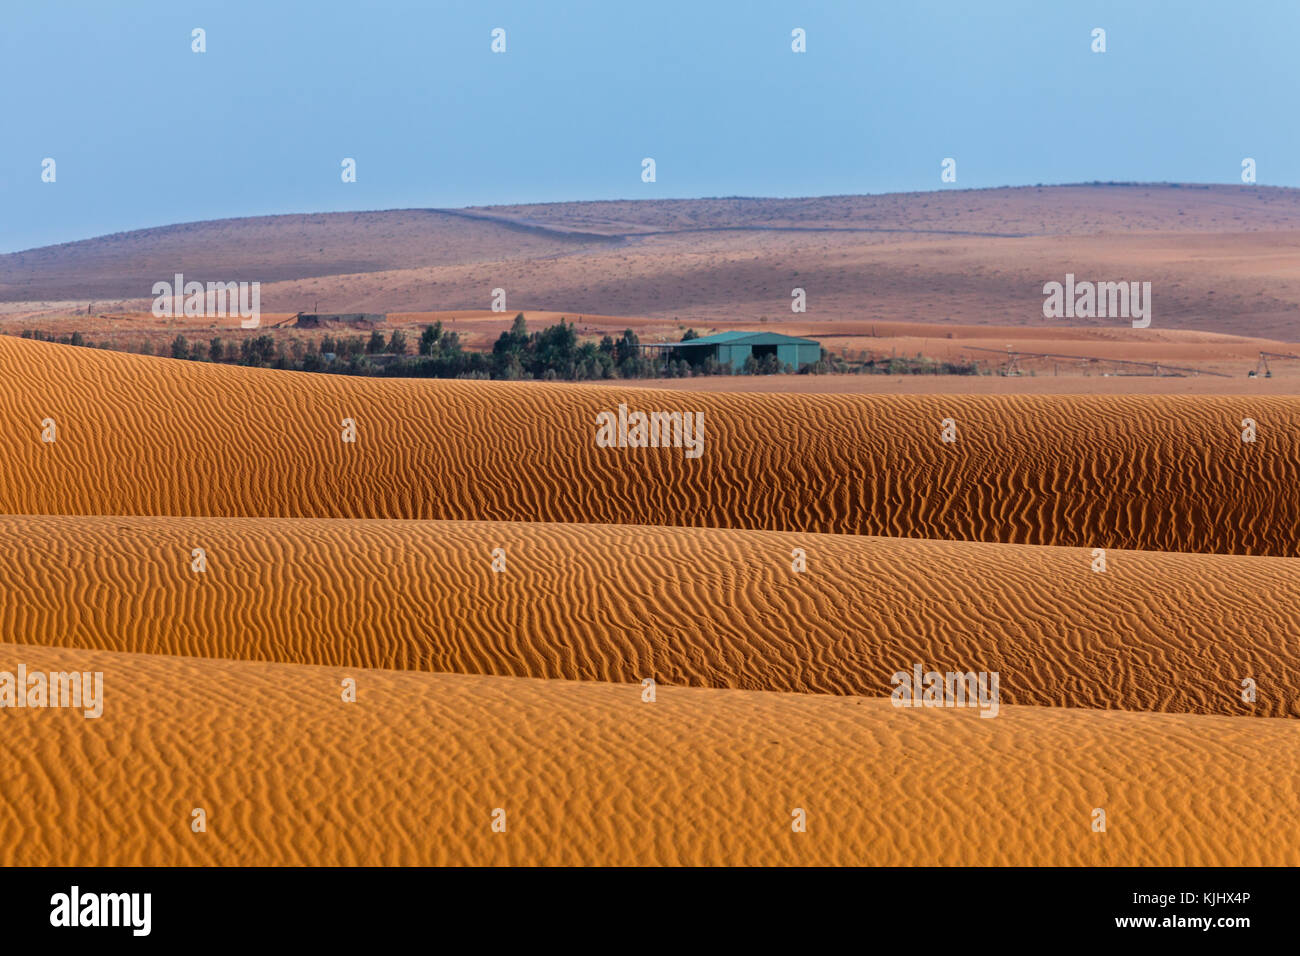 Sand dune in the desert, Saudi Arabia Stock Photo